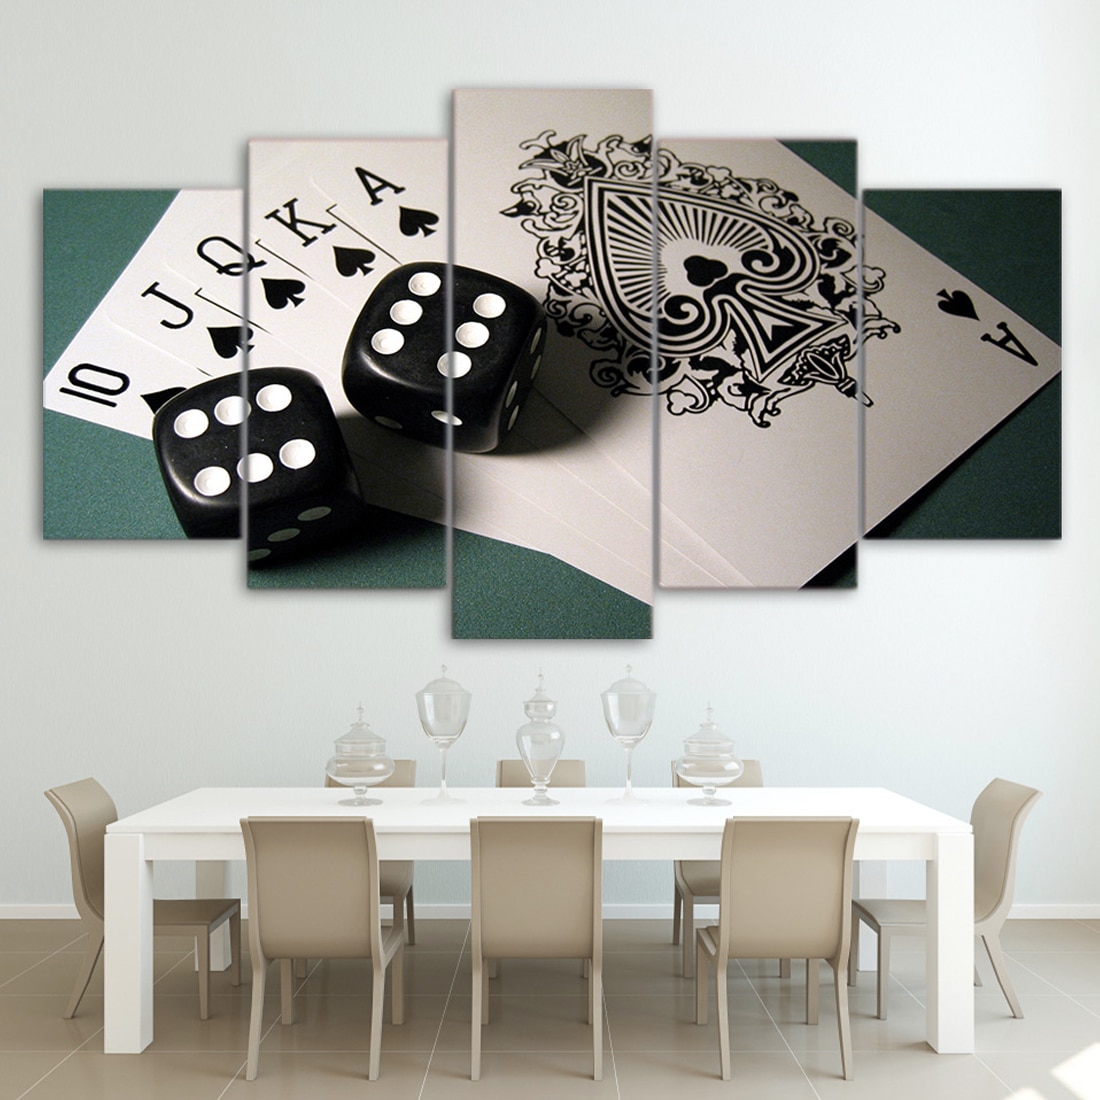 Ace pokerbord